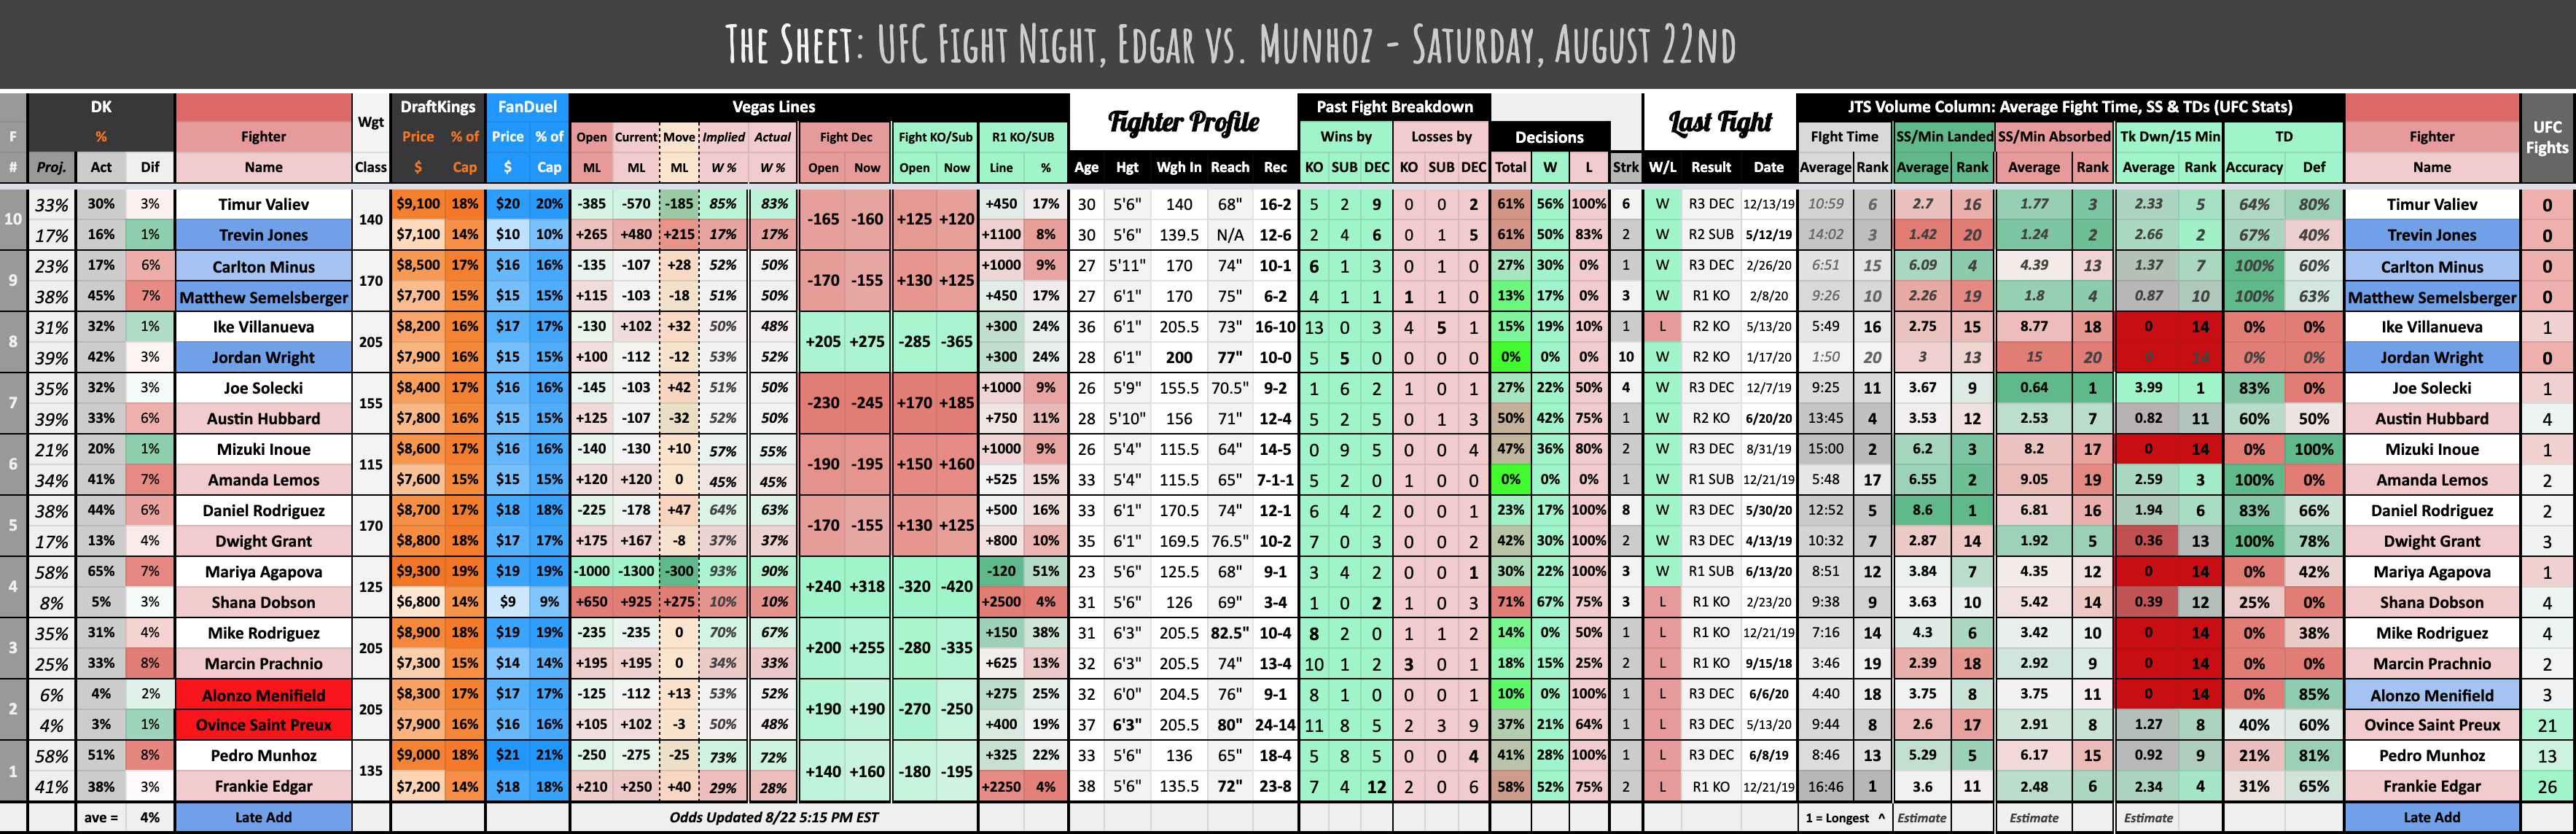 The Sheet: UFC Fight Night, Edgar vs. Munhoz - Saturday, August 22nd, 2020